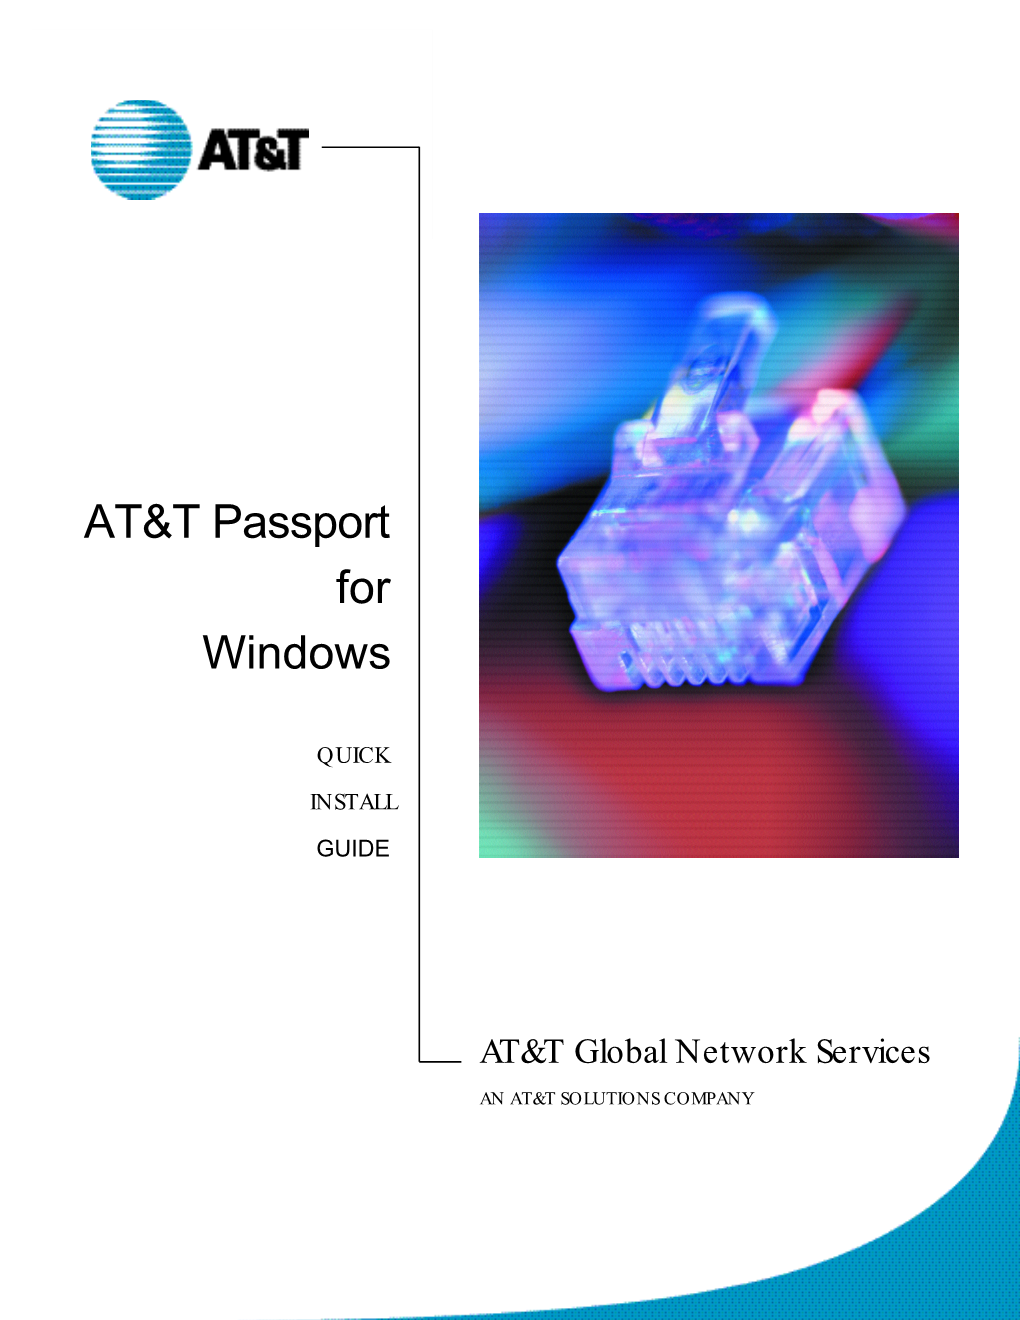 AT&T Passport for Windows